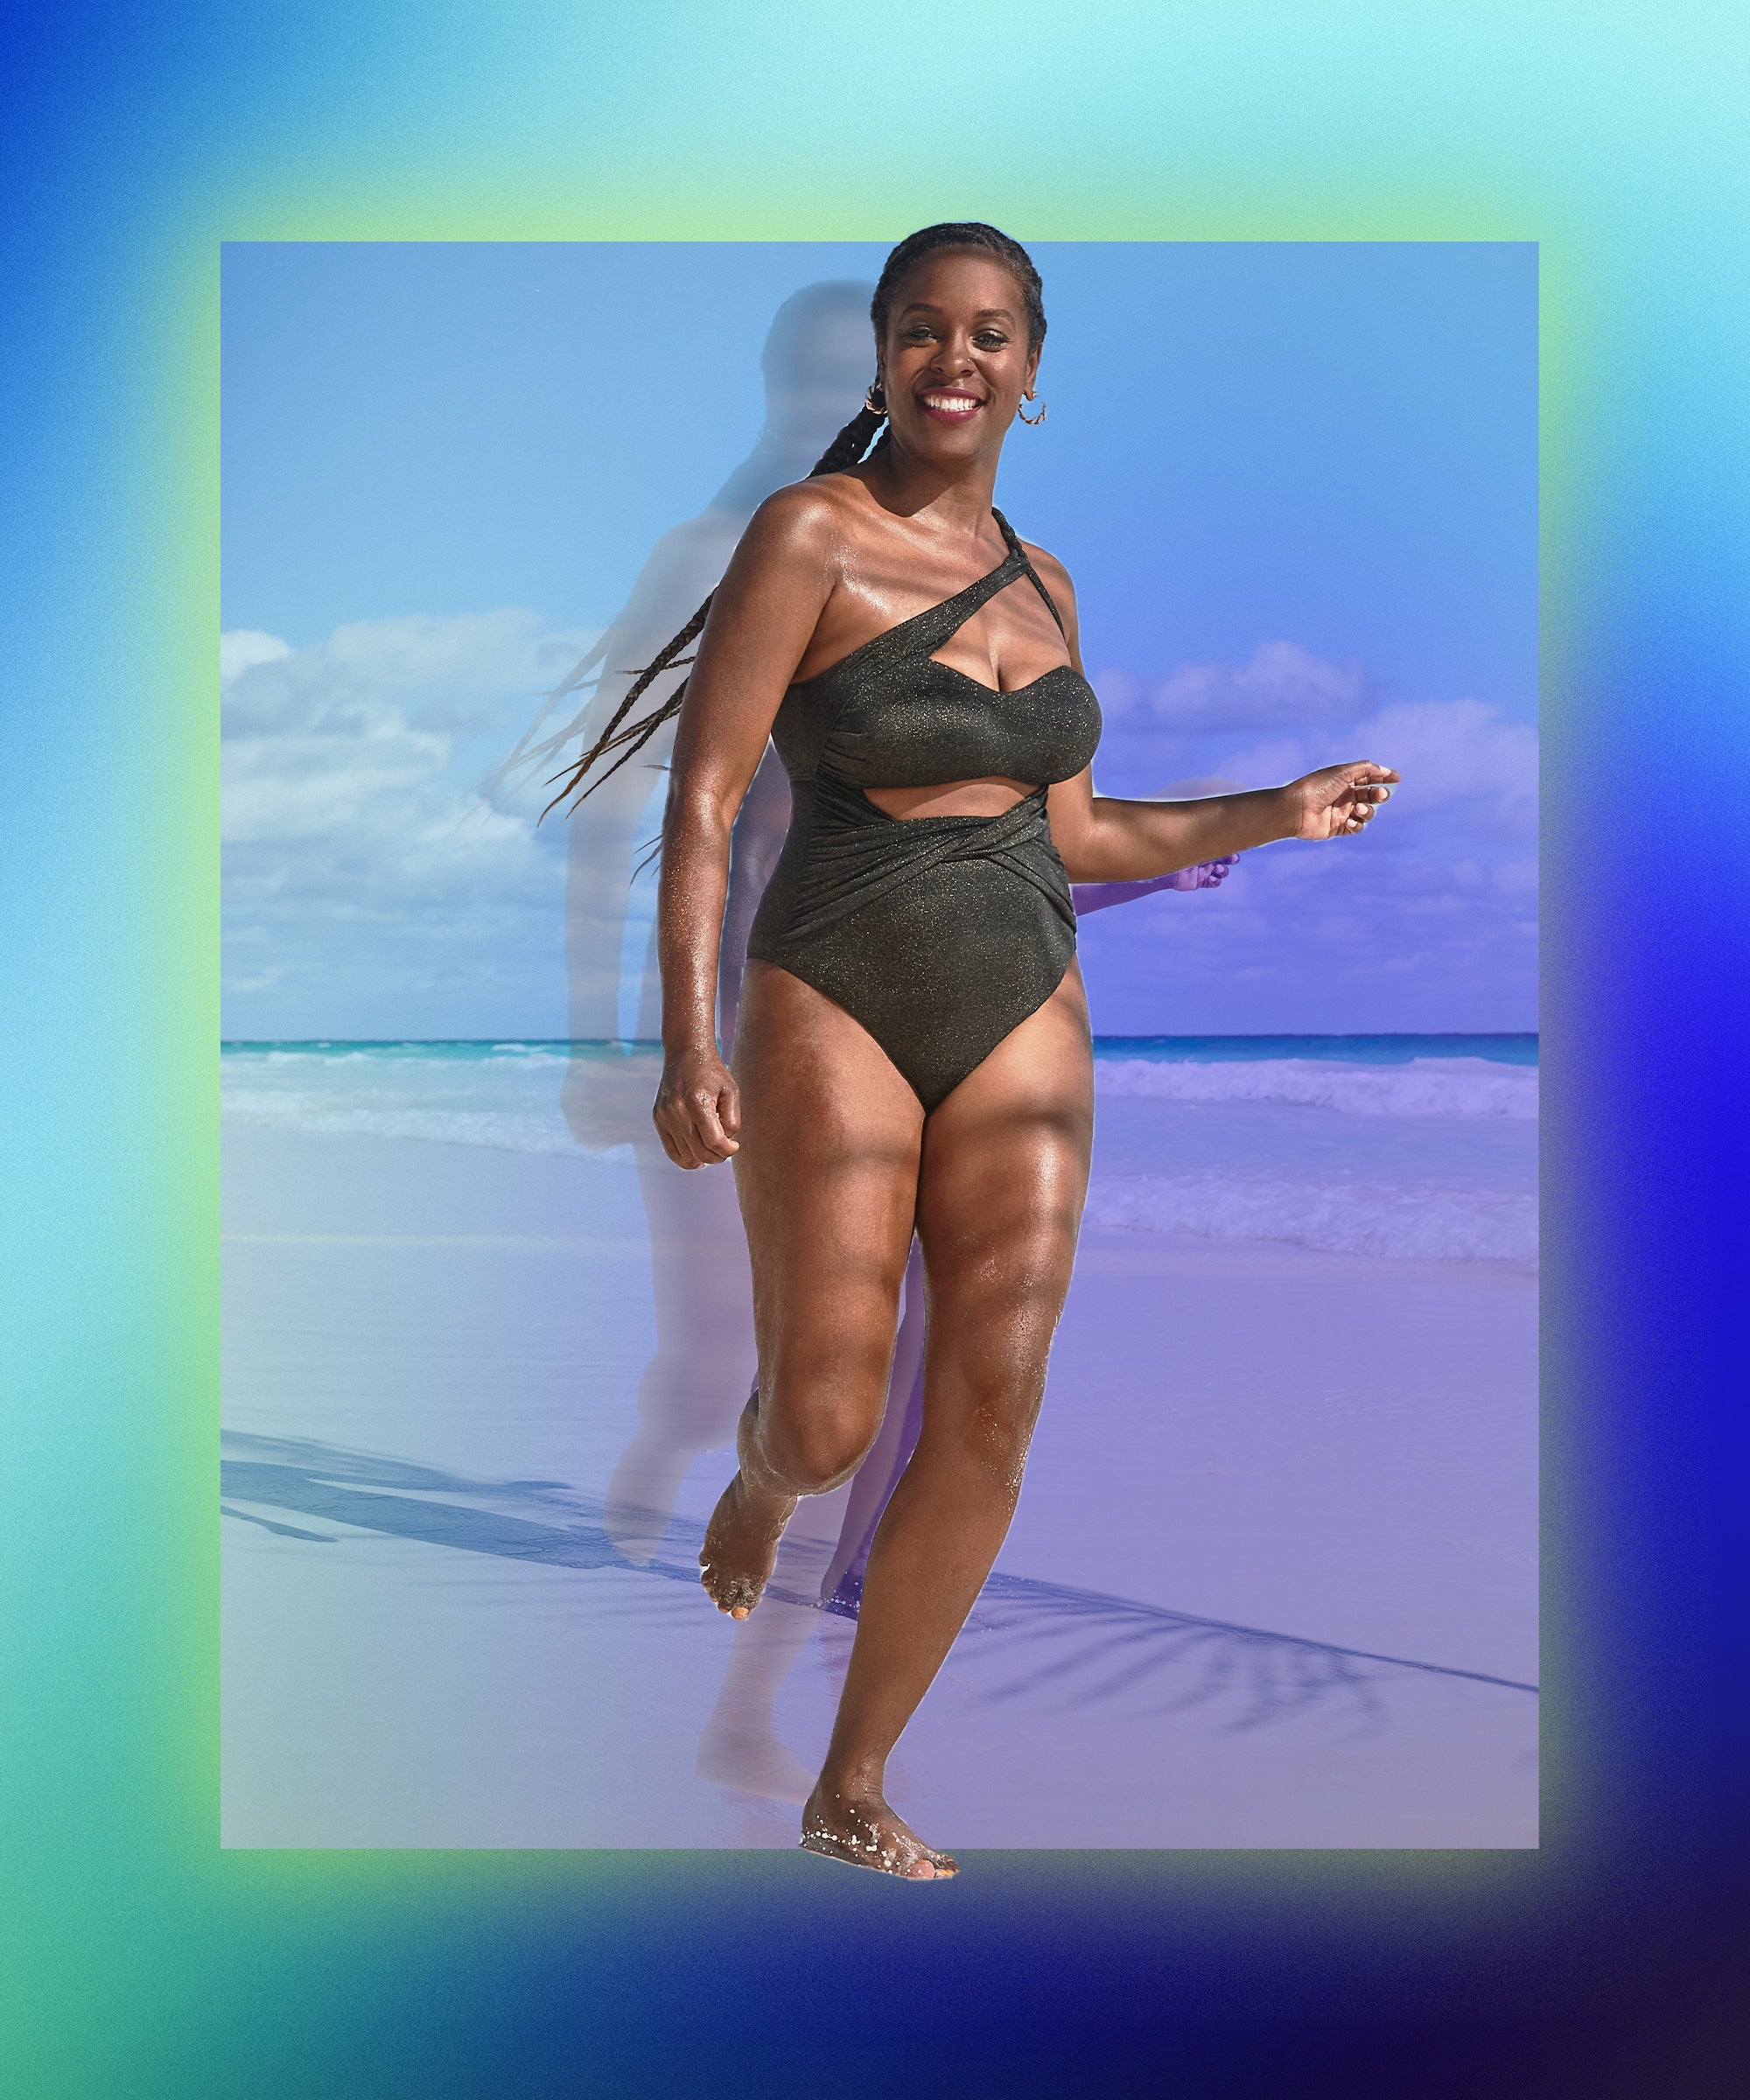 2024 Sexy Black Asymmetrical Sheer Mesh Cheeky One Piece Swimsuit